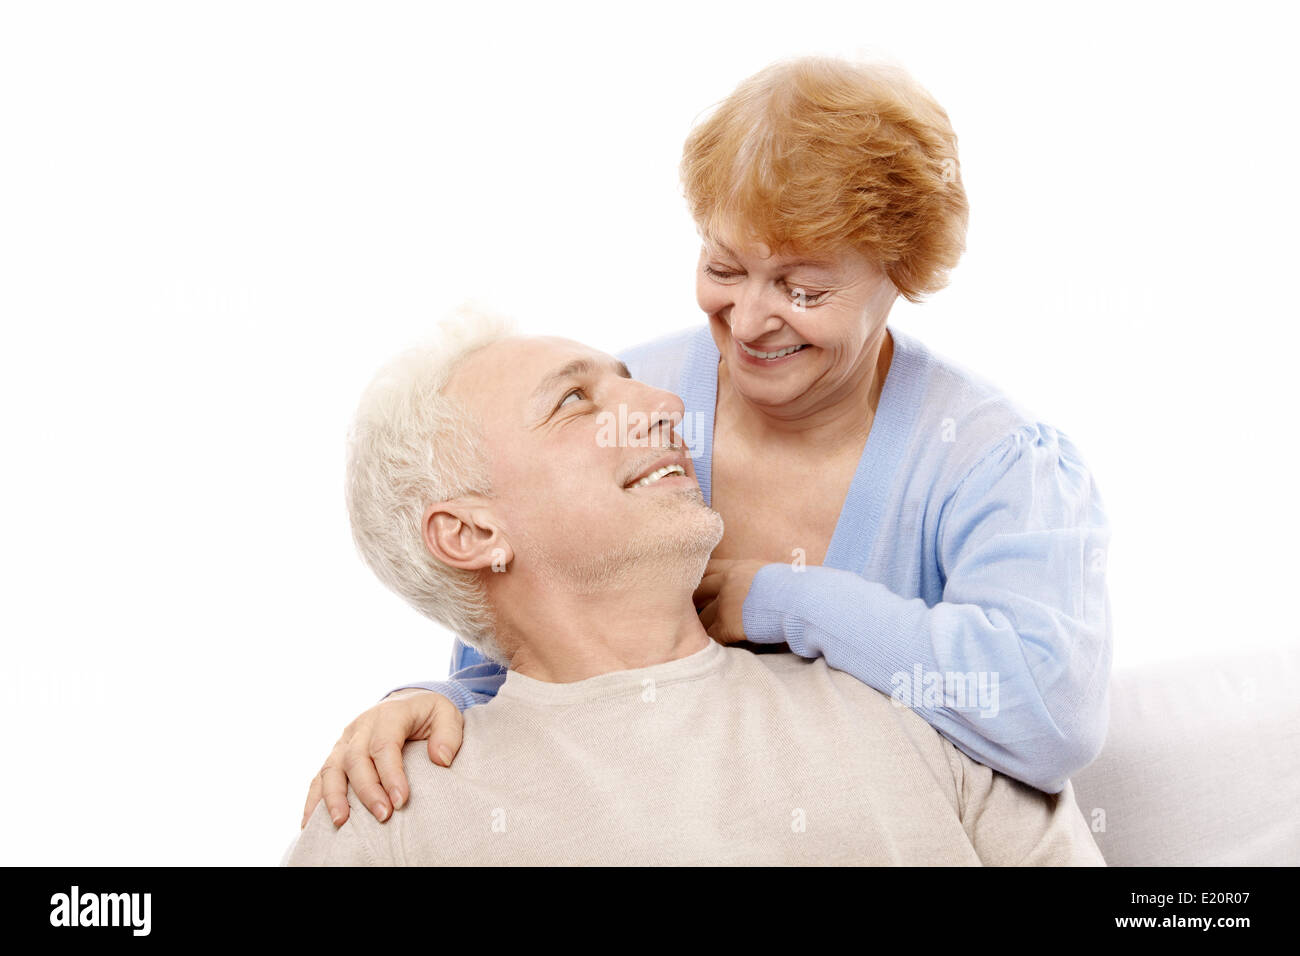 Smiling elderly couple on a white background Stock Photo